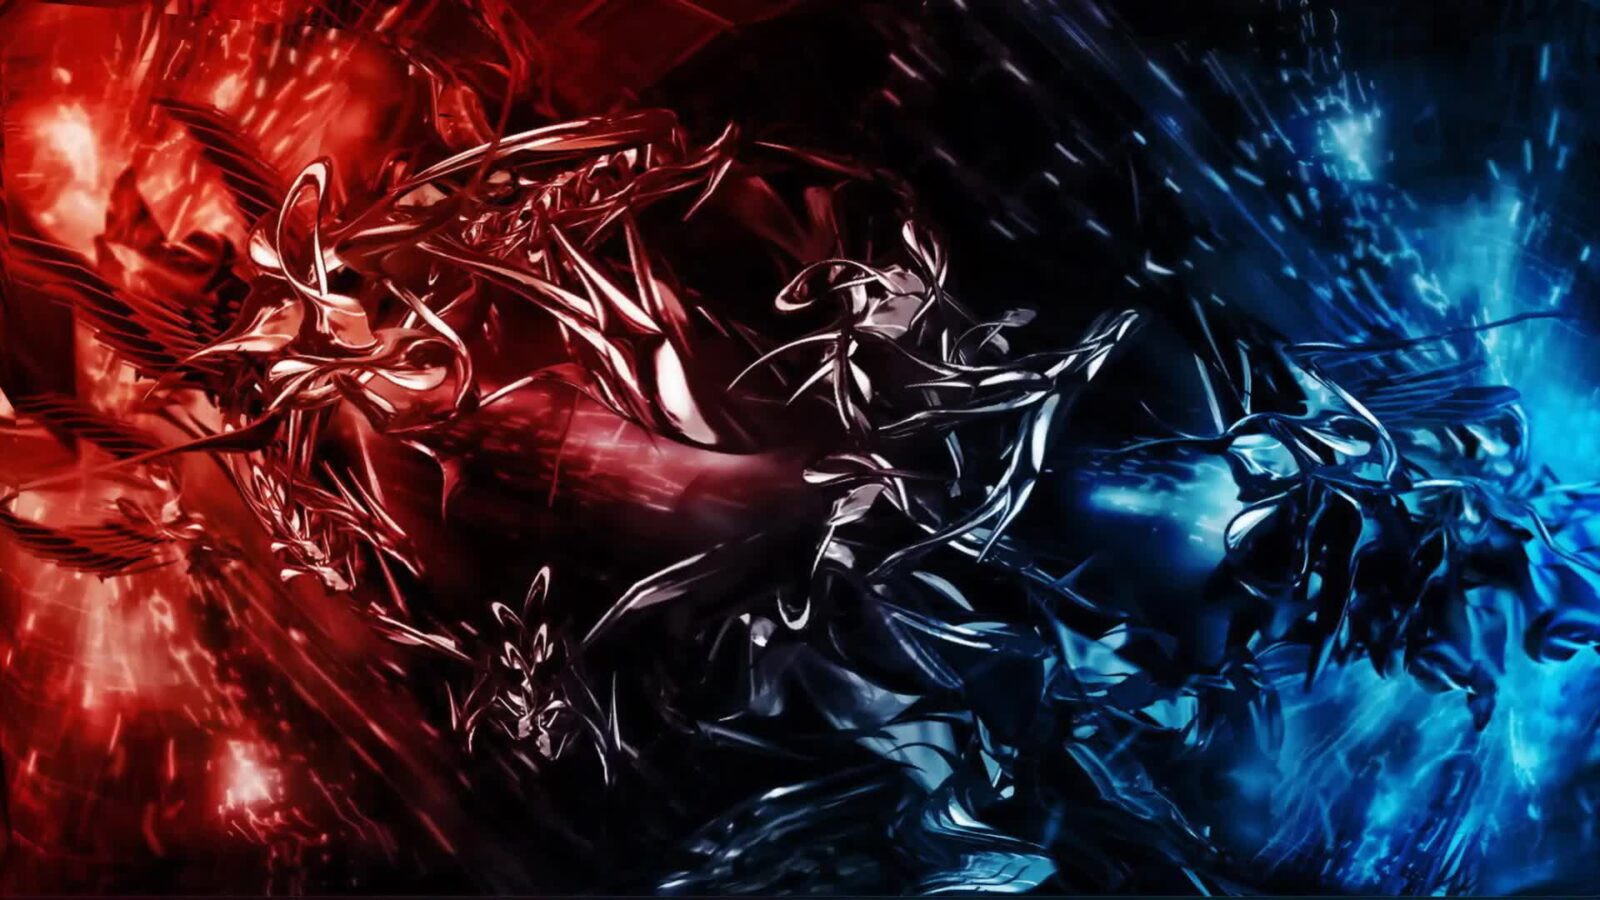 Dark Red vs Dark Blue Abstract Artwork - Free Live Wallpaper